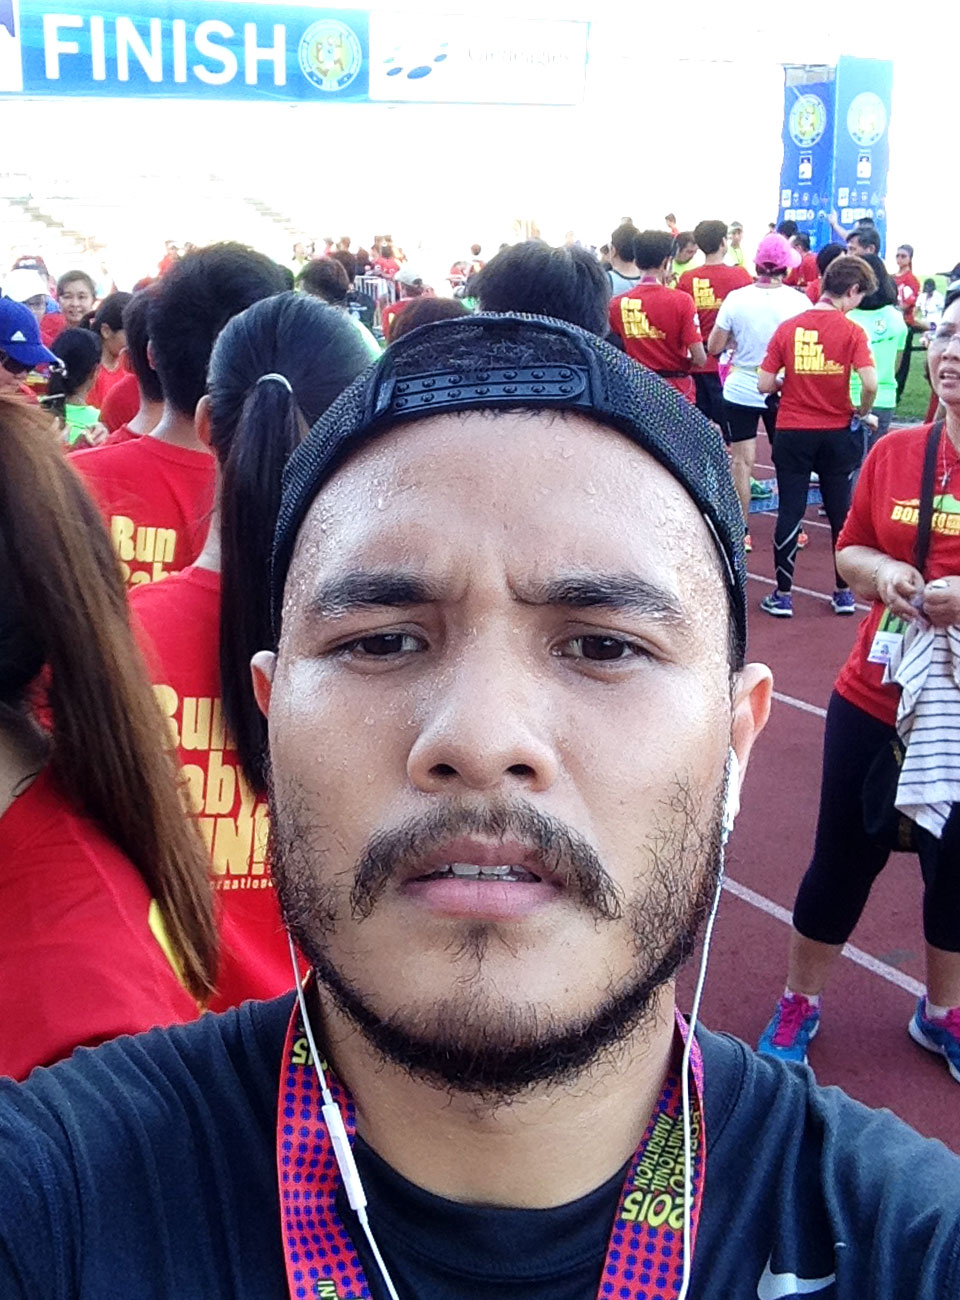 Run Baby Run! – Borneo International Marathon 2015